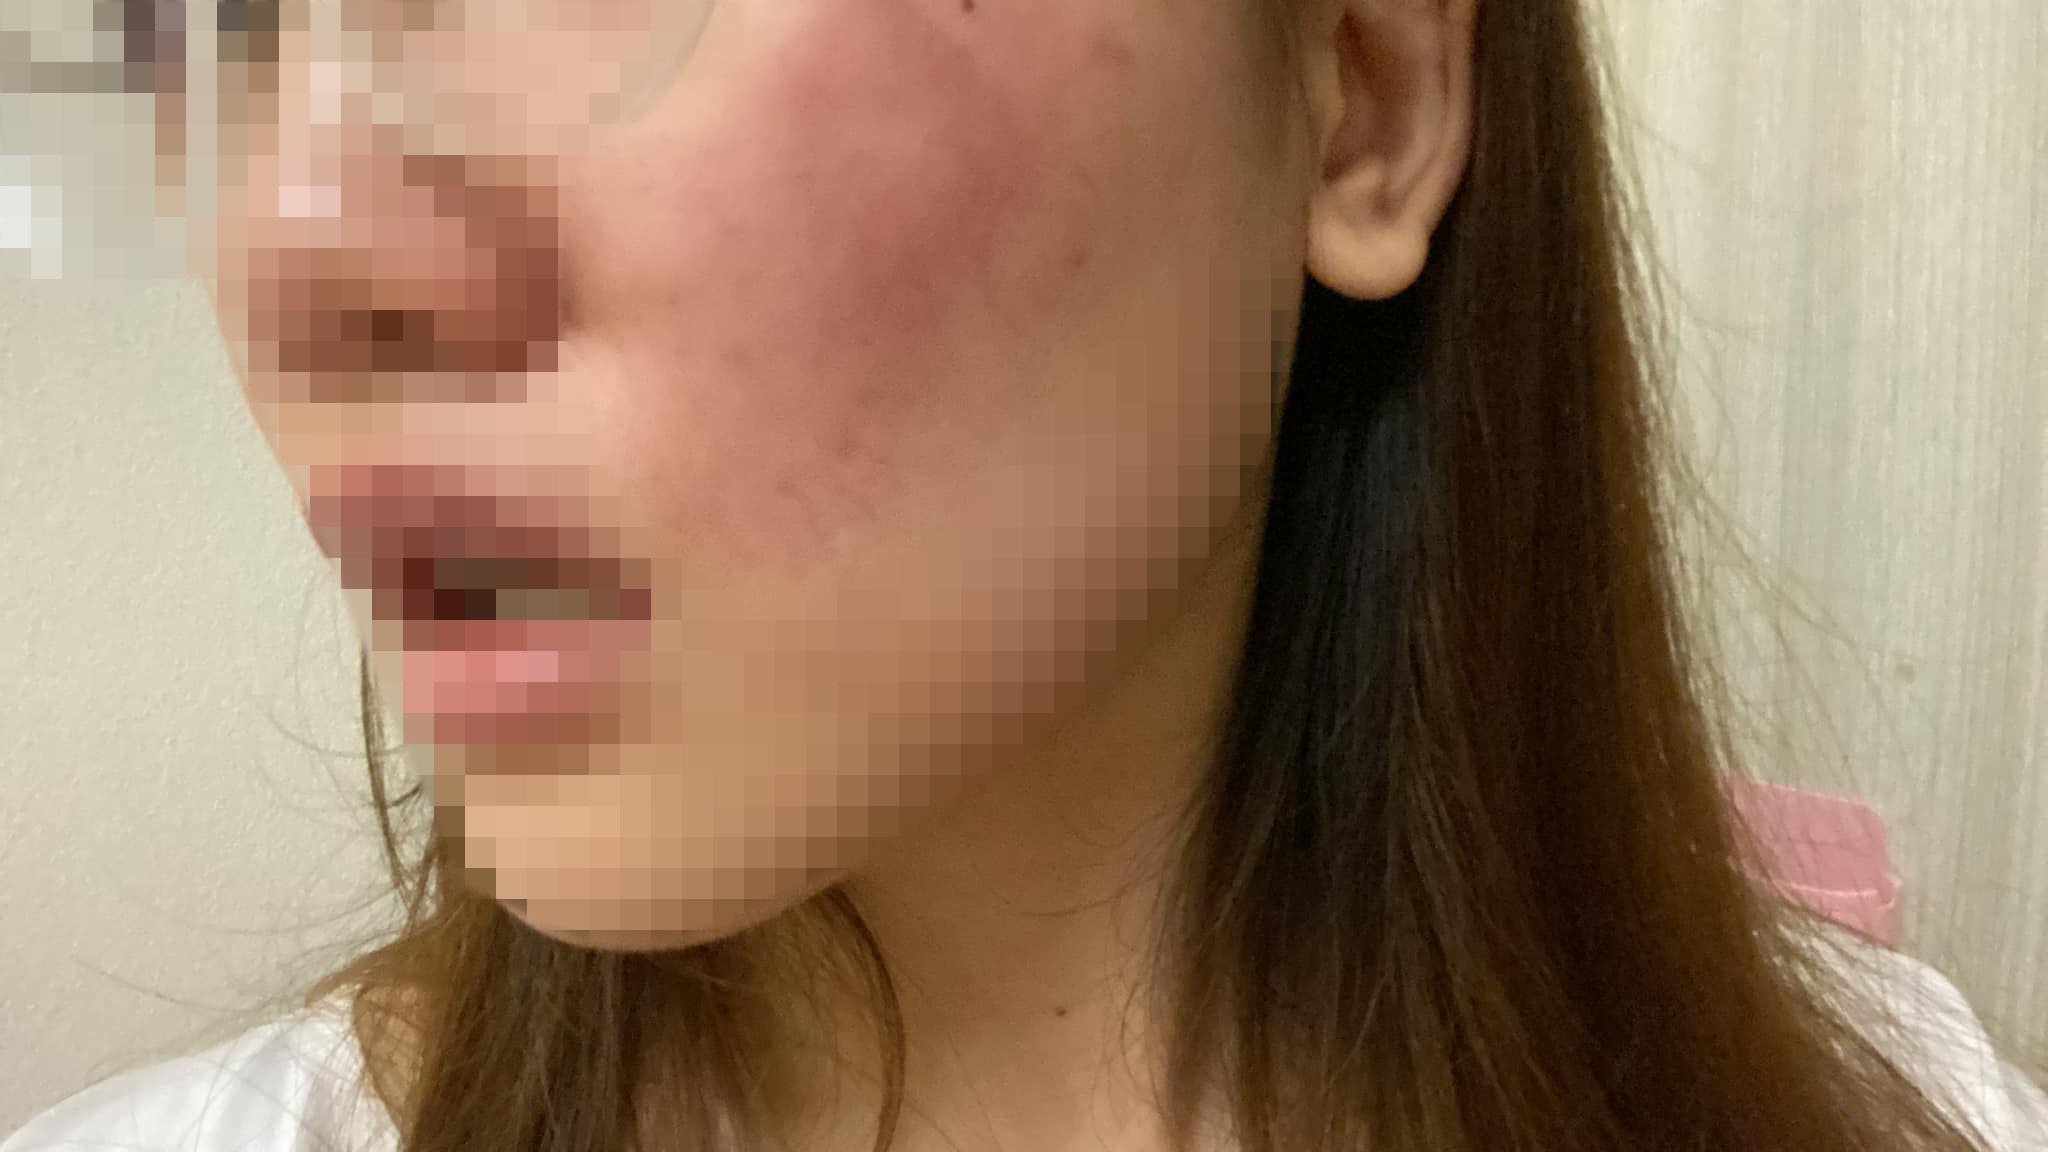 The slap left Vestene with a visible mark on her cheek. Source: Vestene Wong